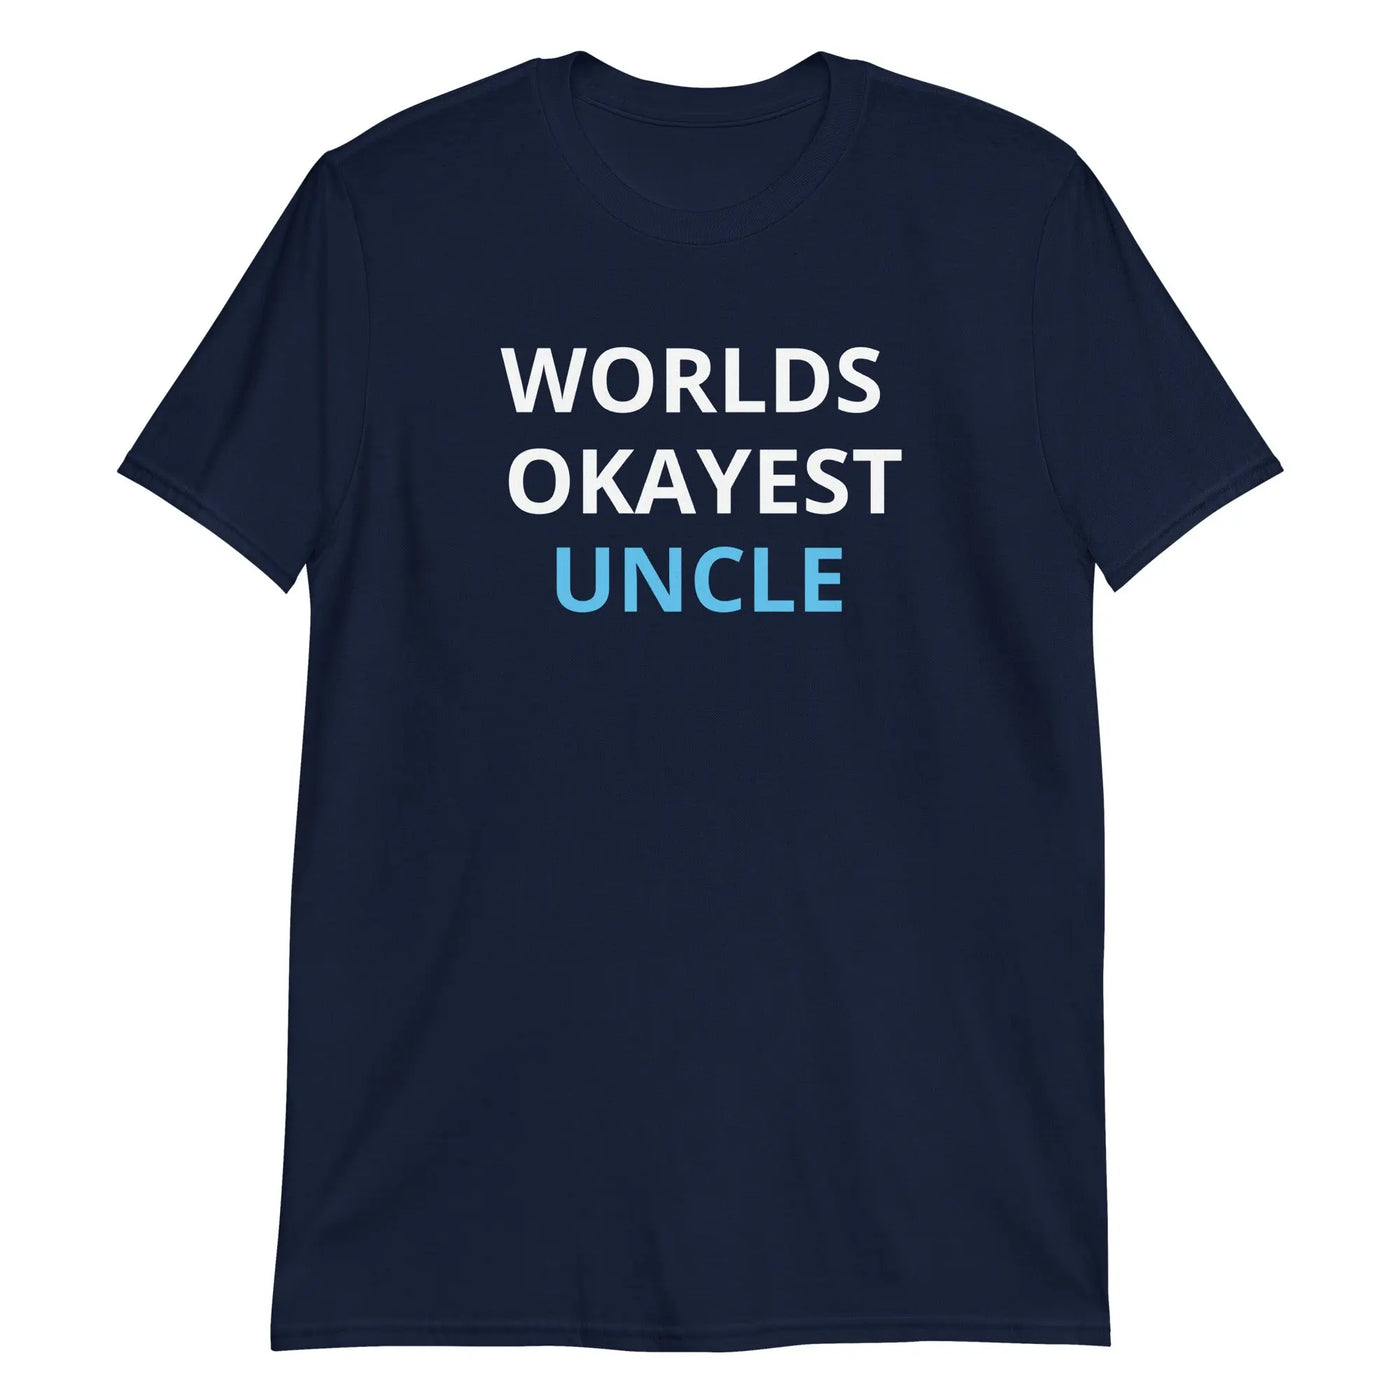 Greatest Customizable Unisex T-Shirt